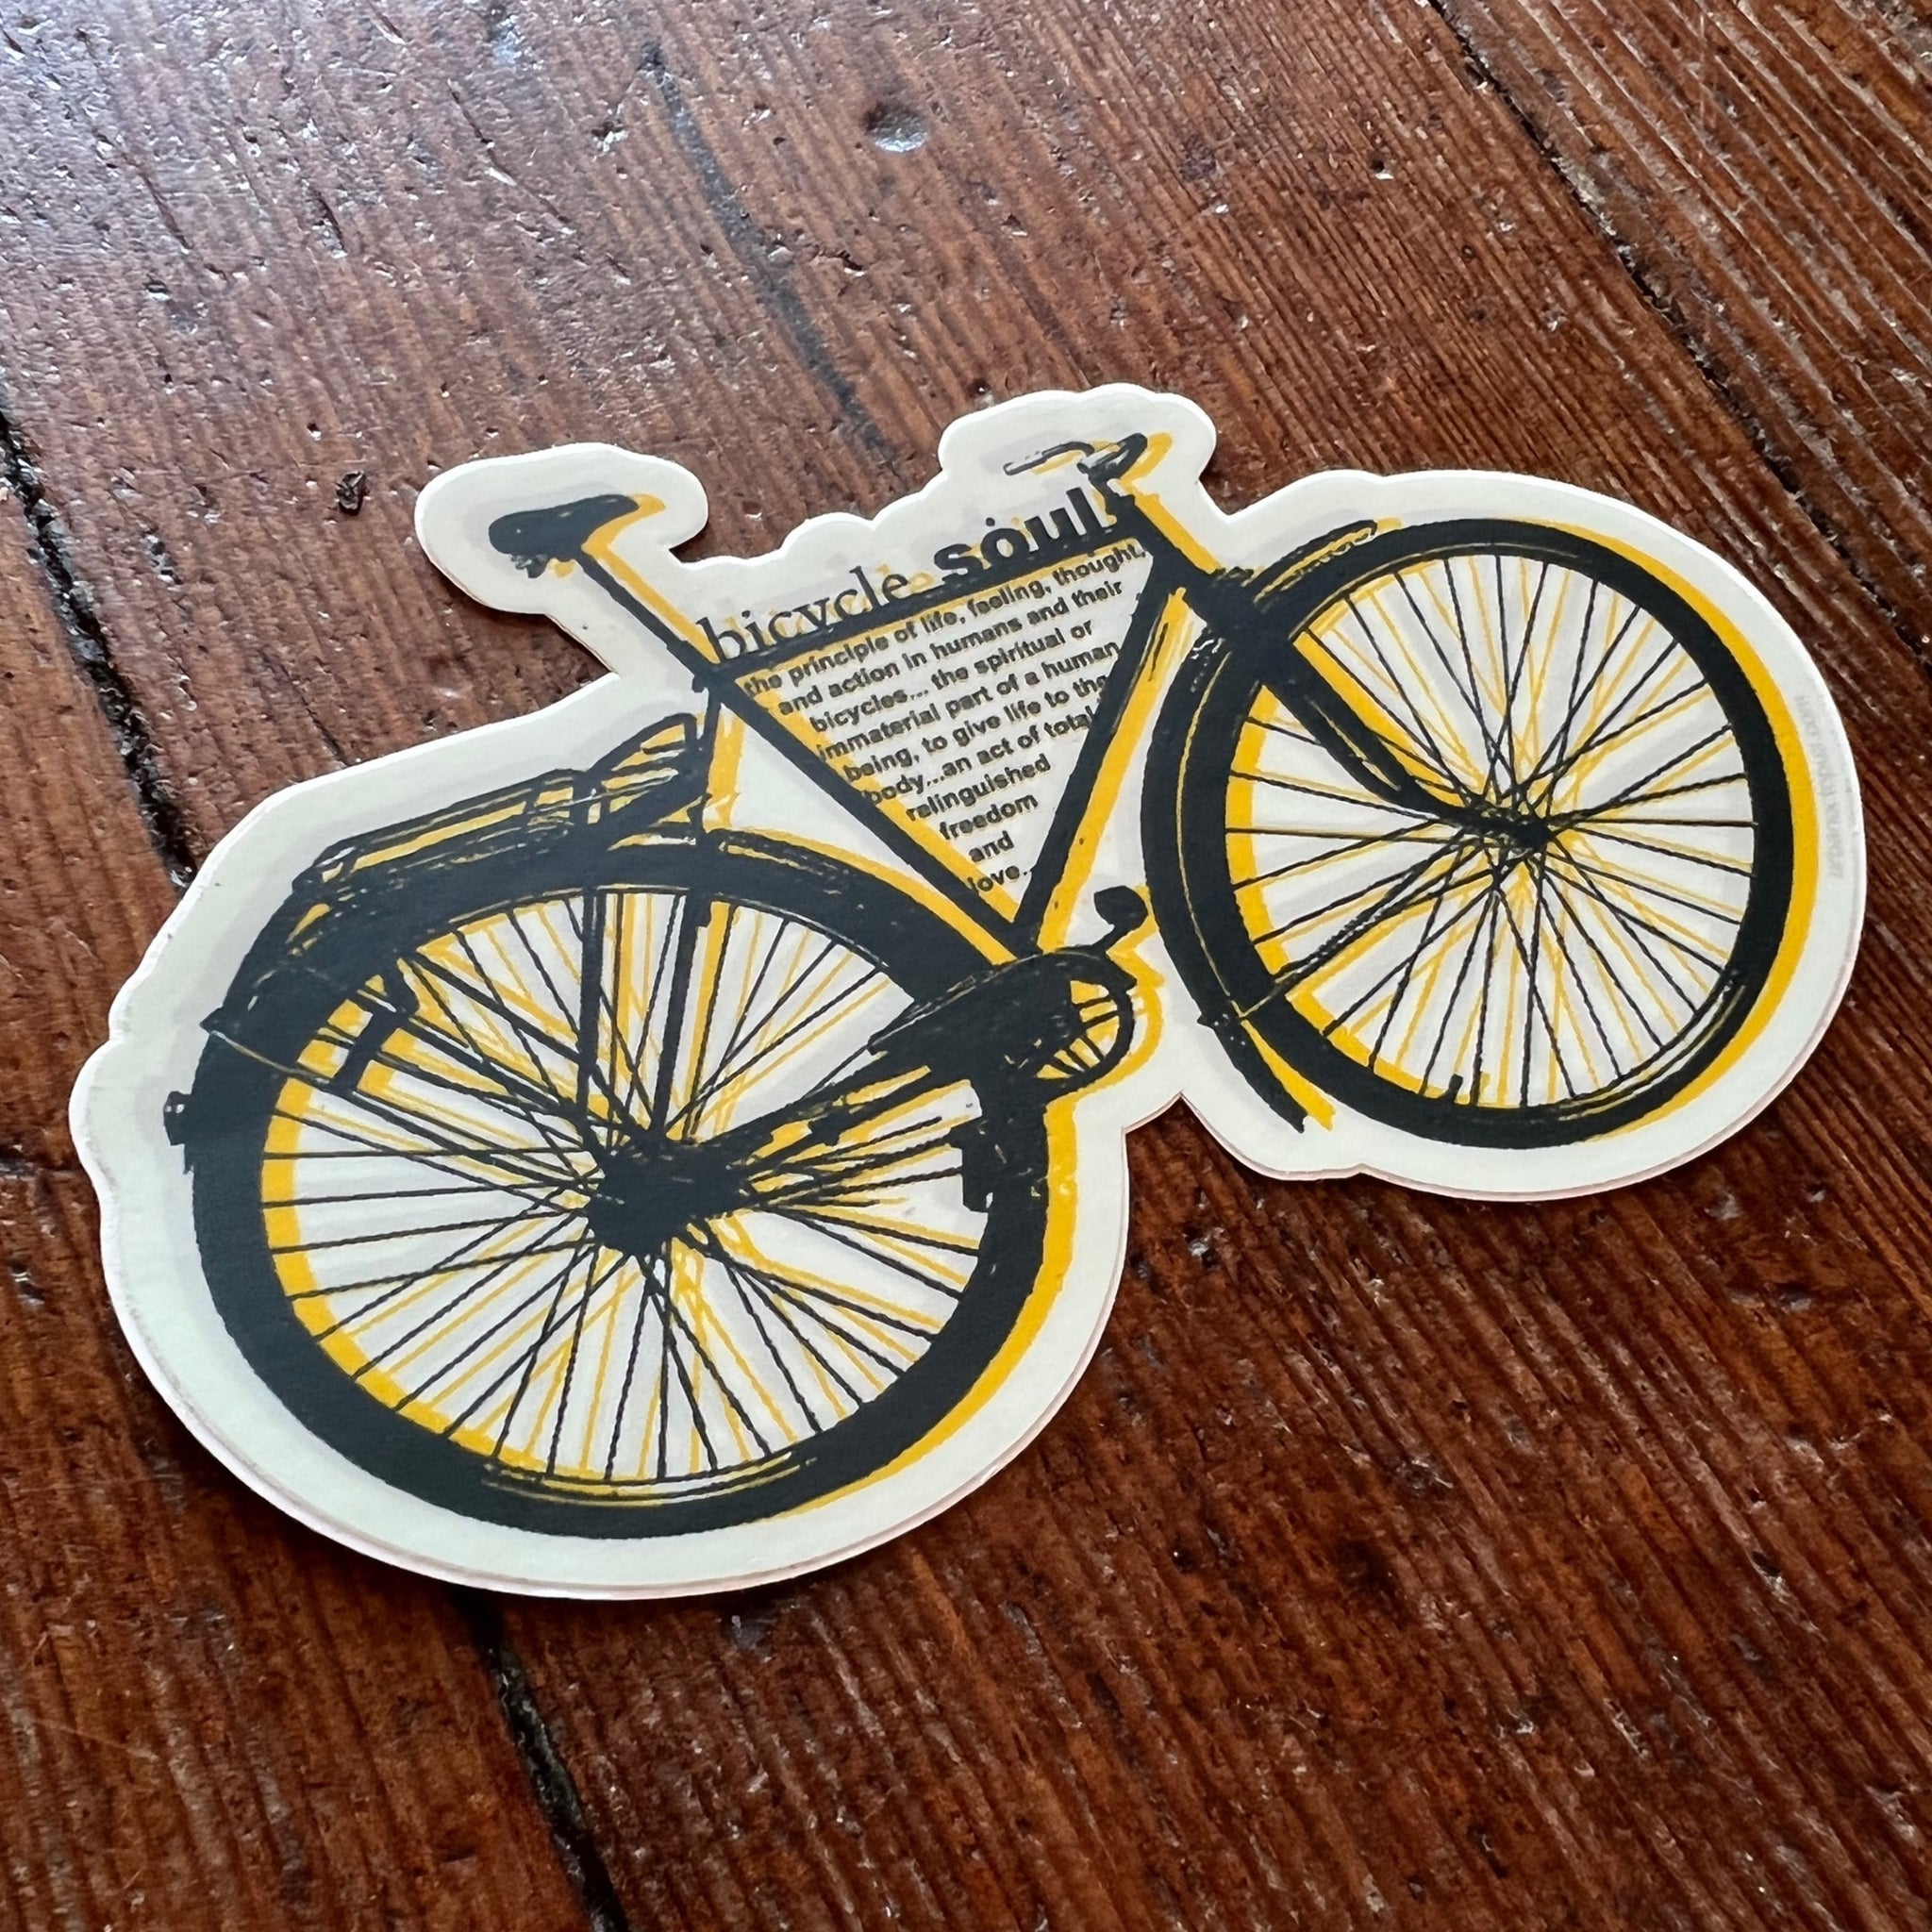 Bicycle Soul Sticker